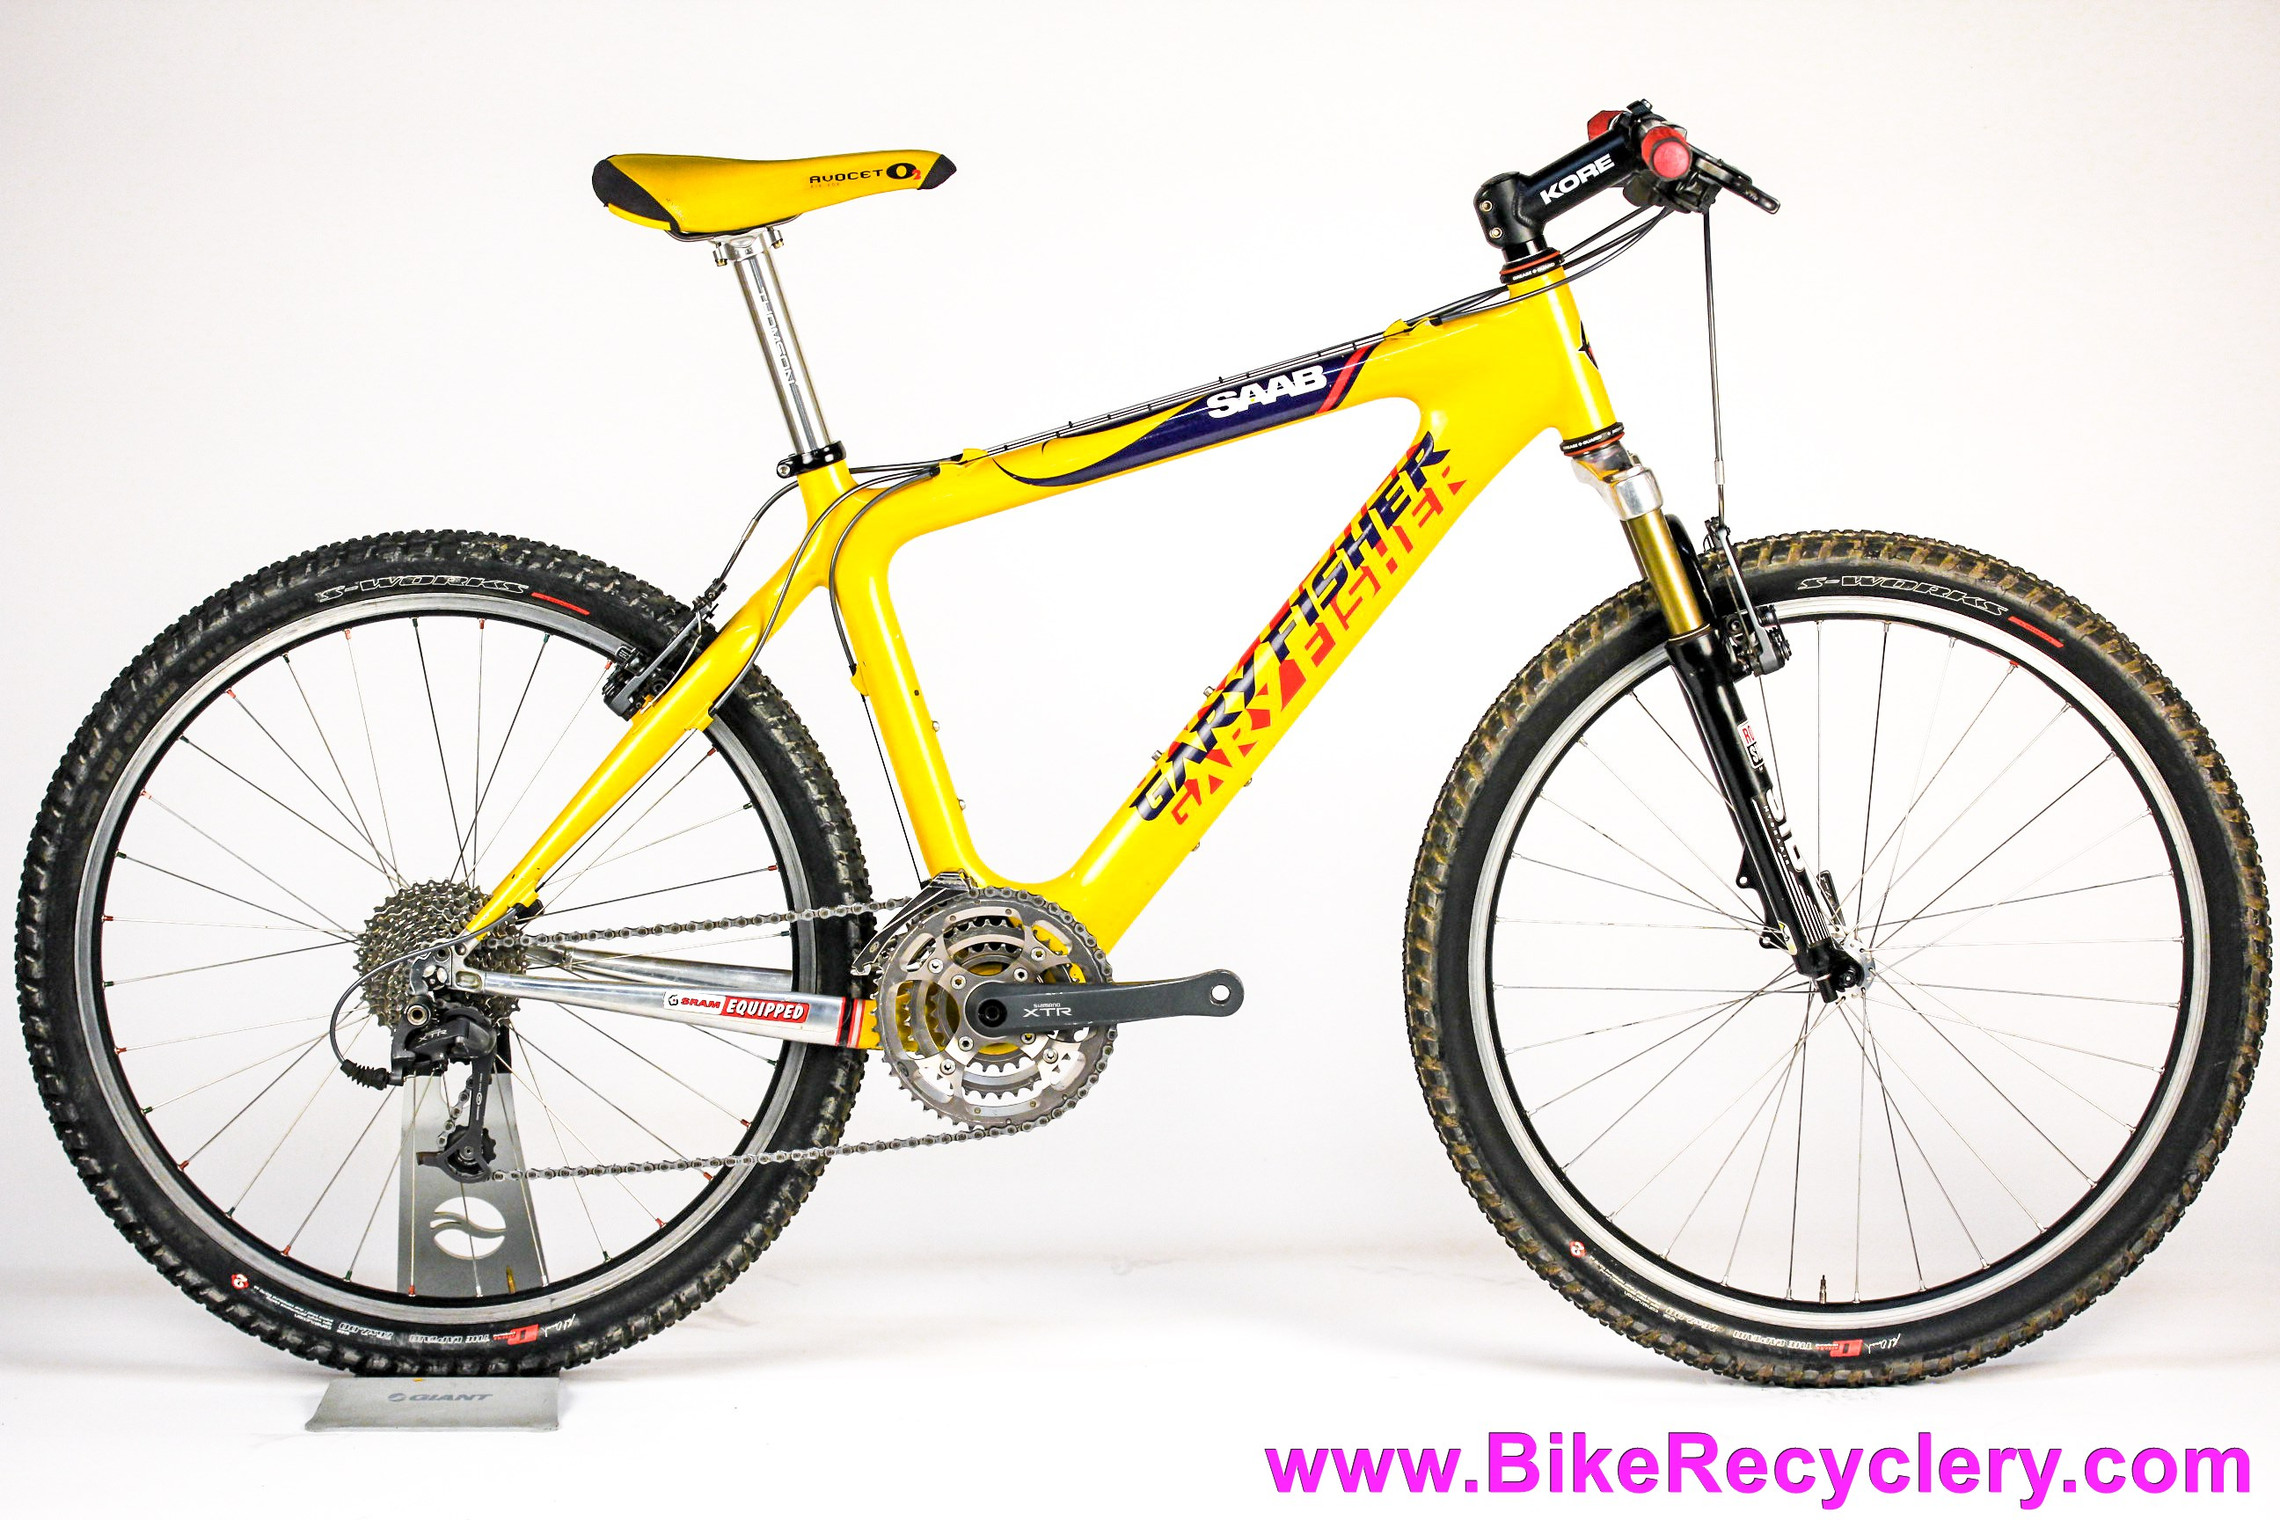 Paola Pezzo Saab Gary Fisher Team Tribute Bike: 17.5" - Disc/V - 2000 Trek  Pro 9.9 Carbon - Machine Tech - FULL XTR M952 - Yellow/Red Factory Paint -  Bike Recyclery